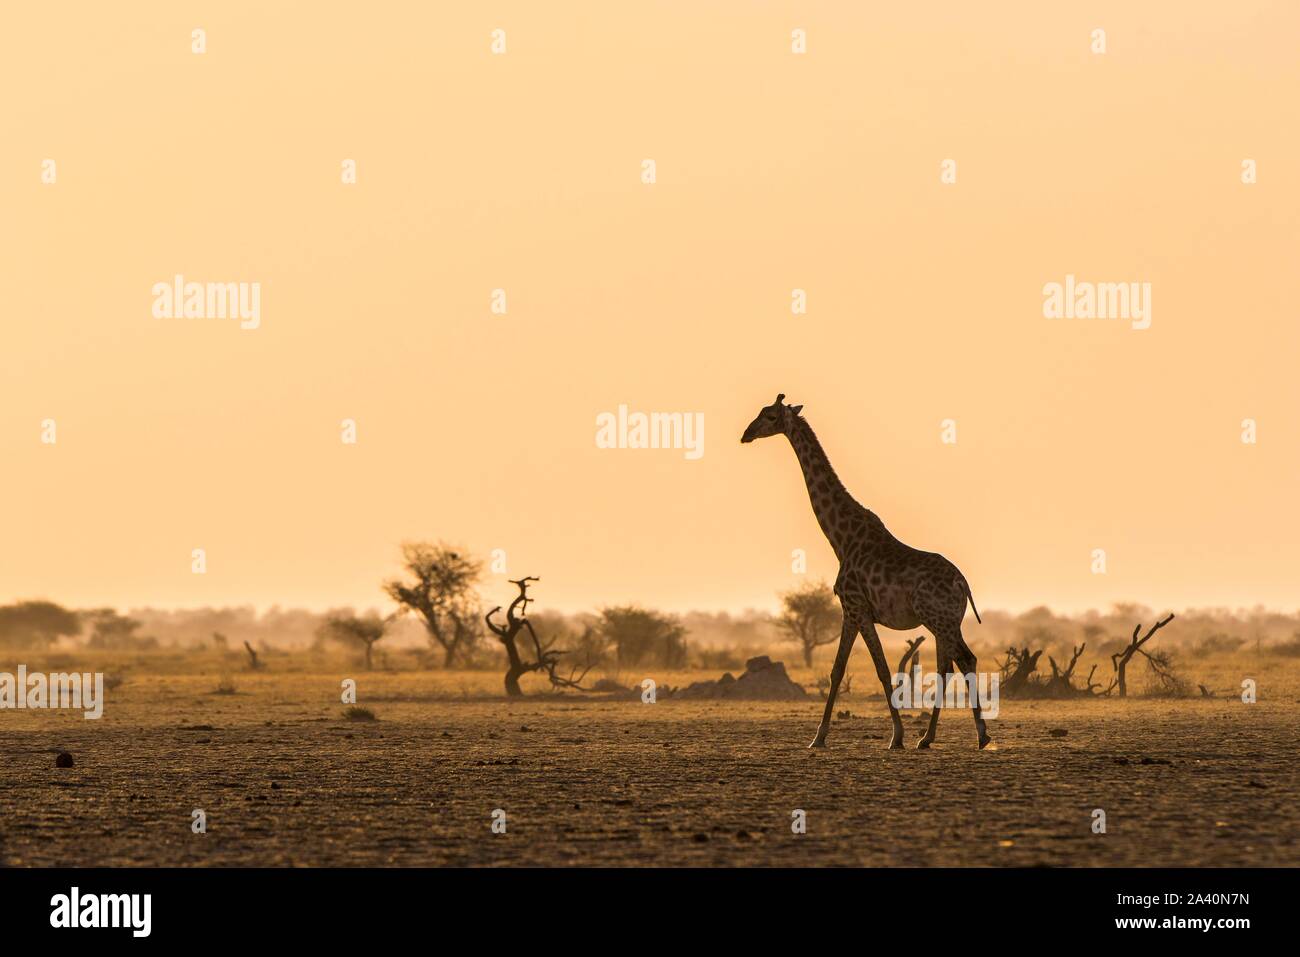 A Angolan Giraffe (Giraffa camelopardalis angolensis) runs in the evening light in the savannah, Nxai Pan National Park, Ngamiland, Botswana Stock Photo